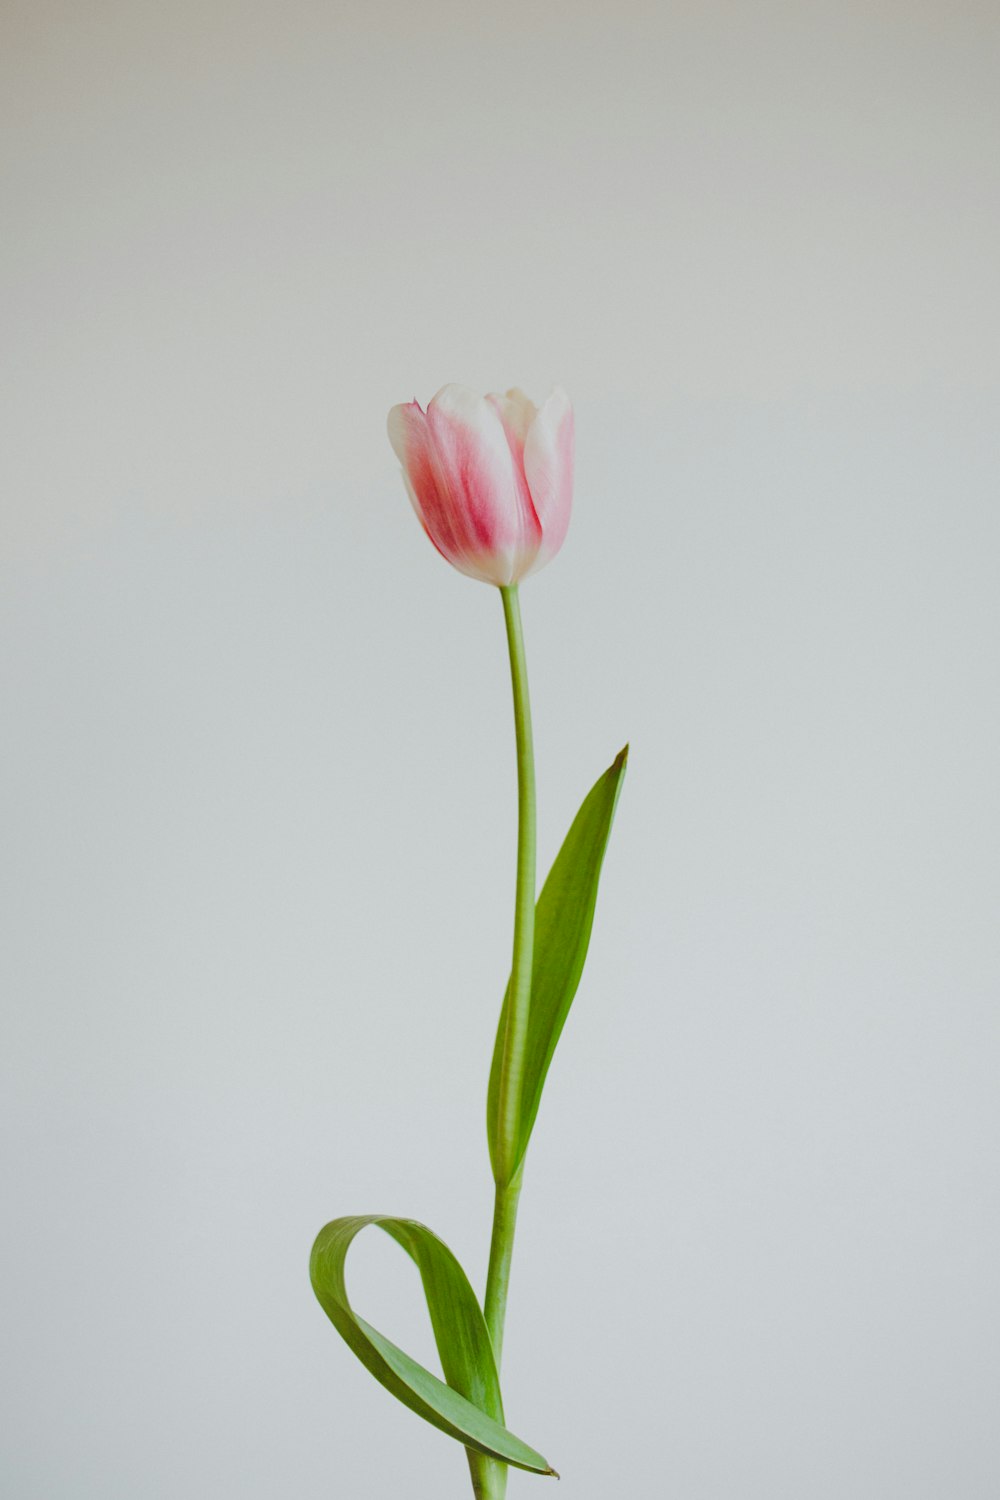 Tulip Flower Pictures | Download Free Images on Unsplash